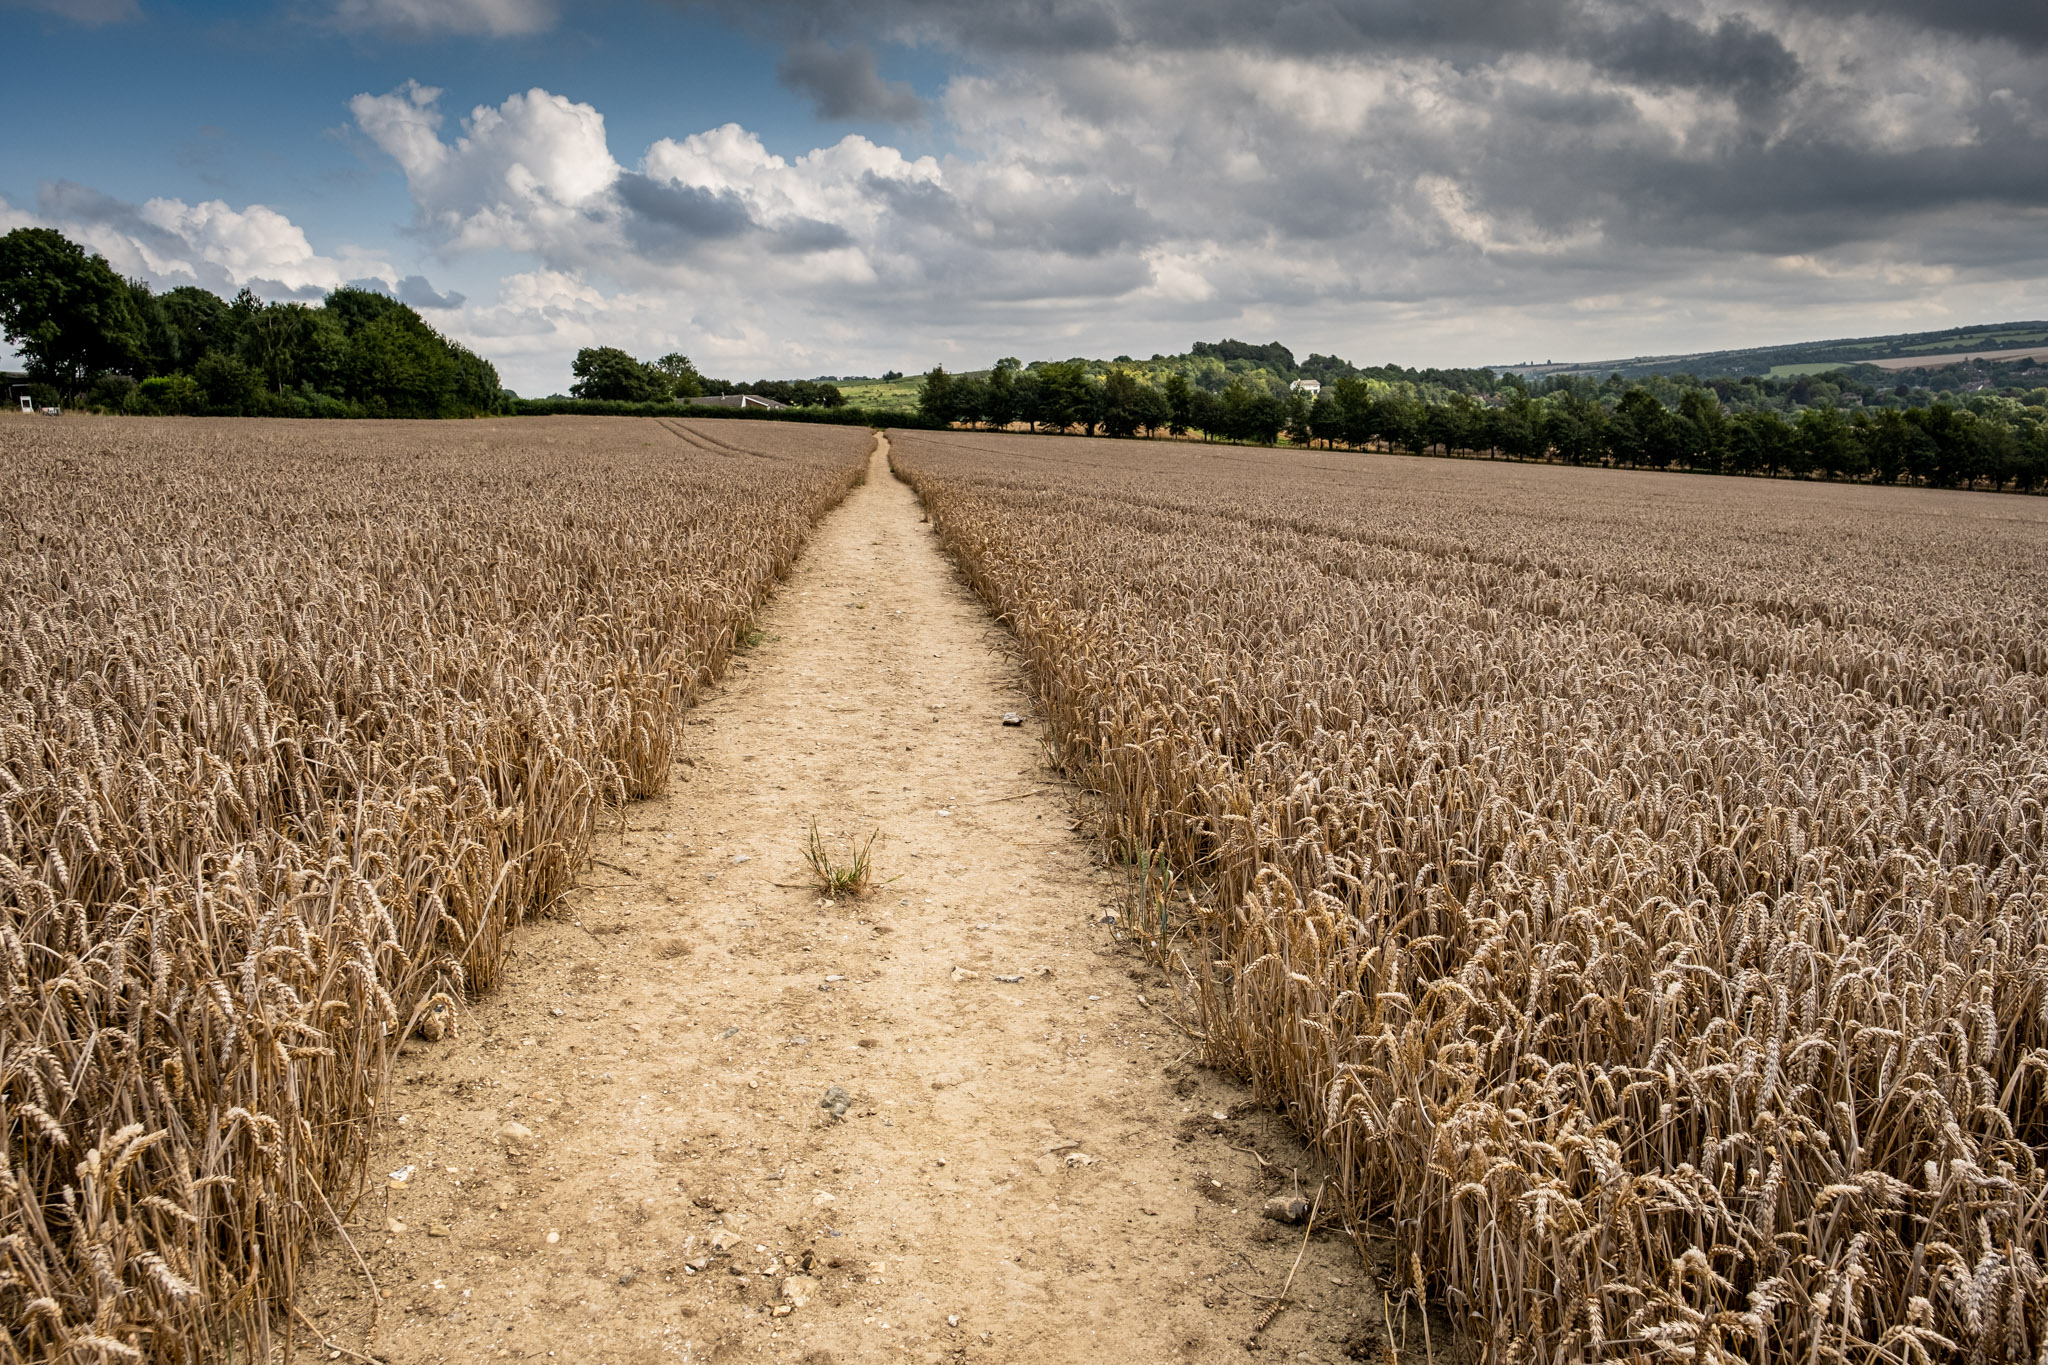 Cut footpath through field of dried wheat